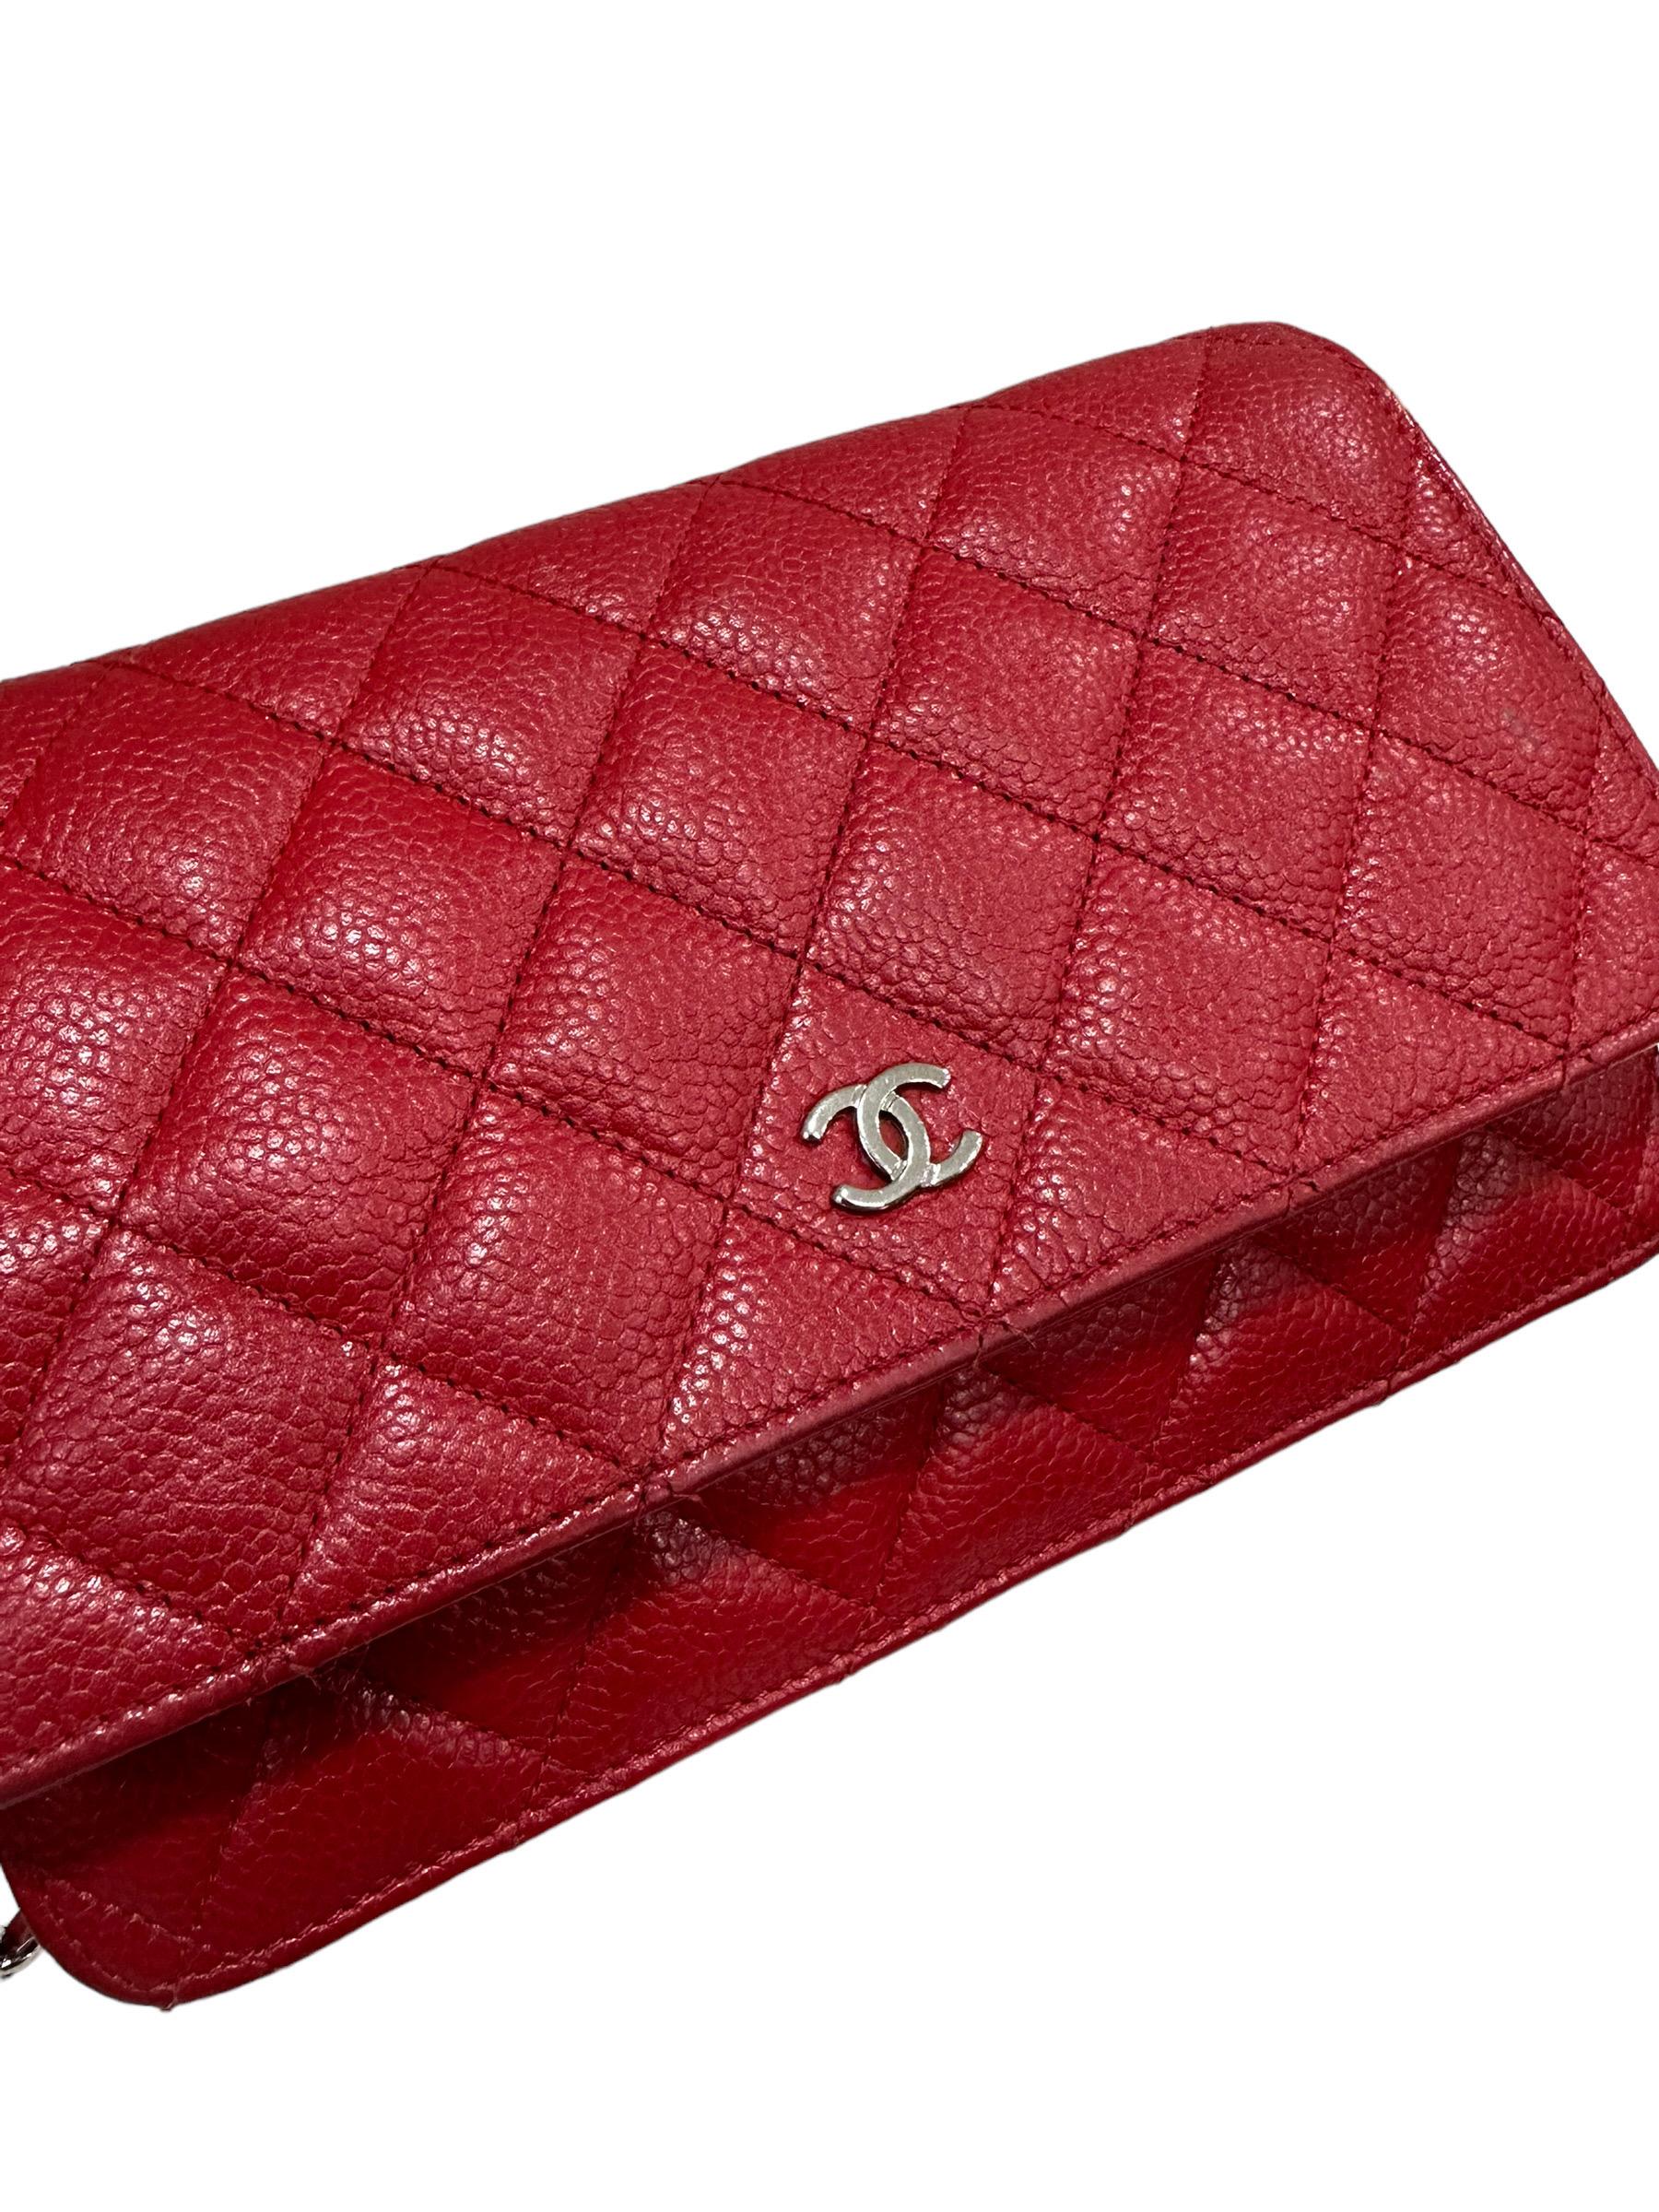 Women's 2013 Chanel Woc Caviar Red Crossbody Bag